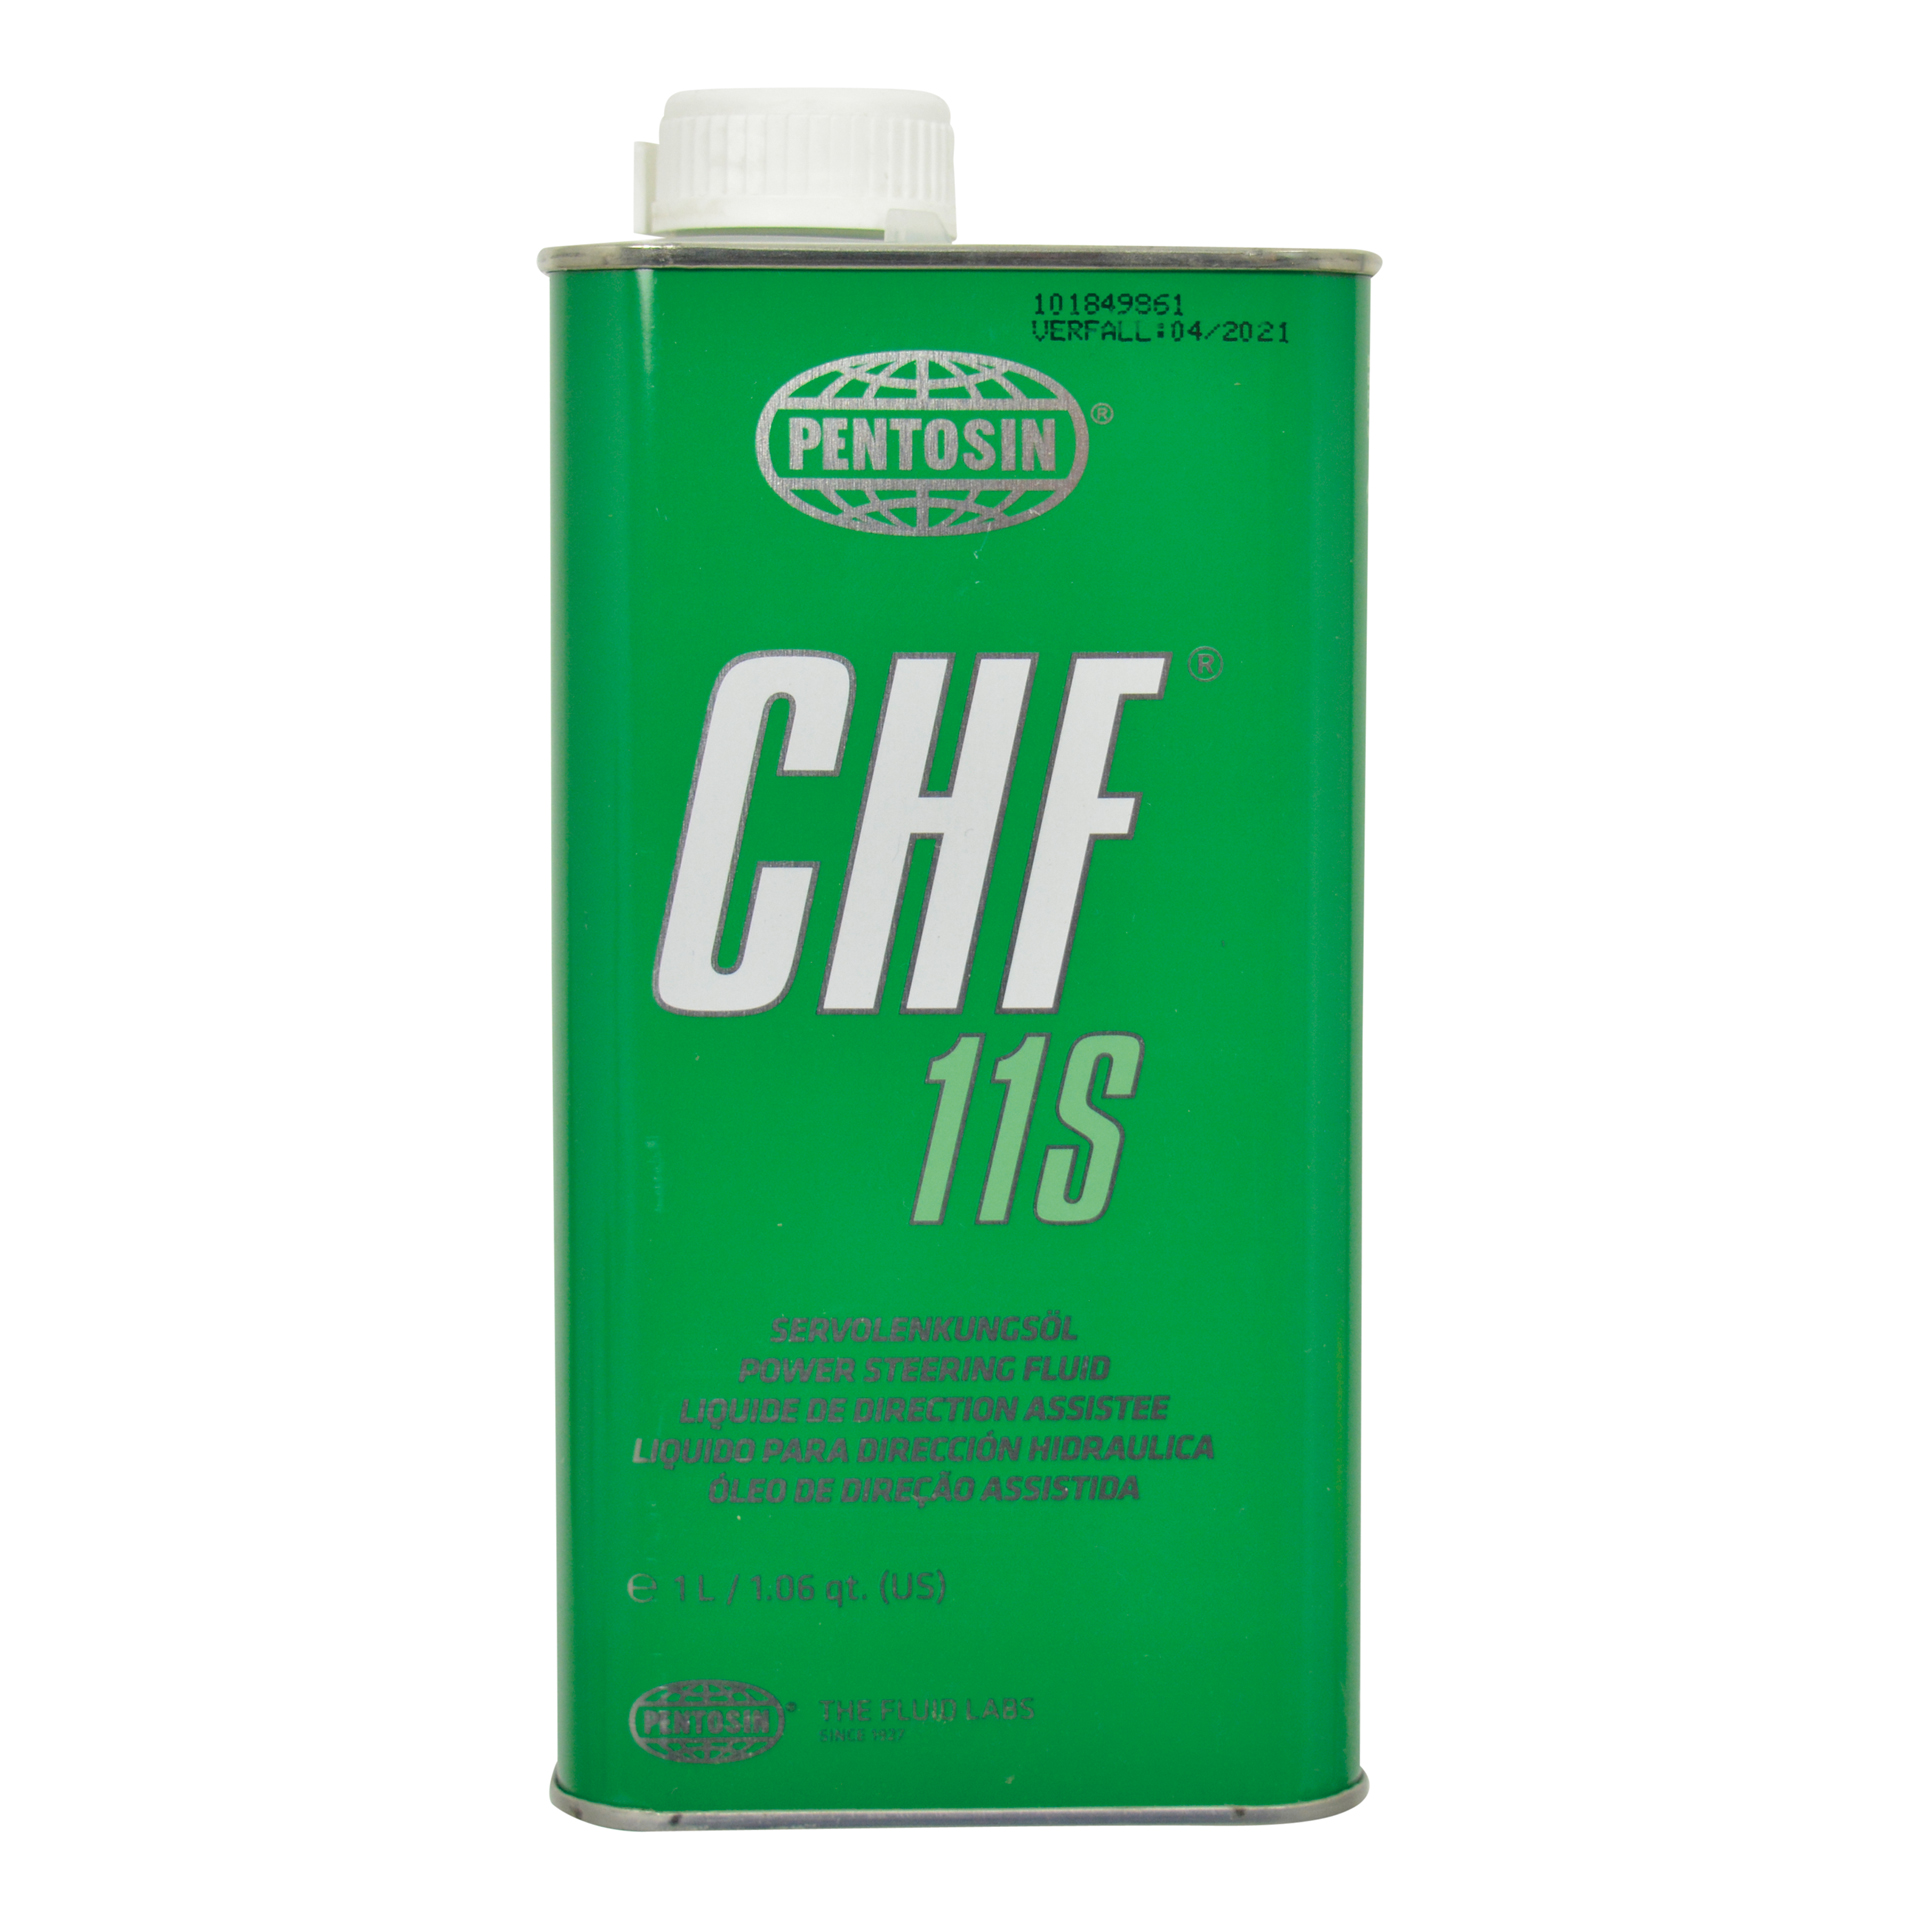 Unbranded Pentosin CHF 11S 1 Liter 1838182